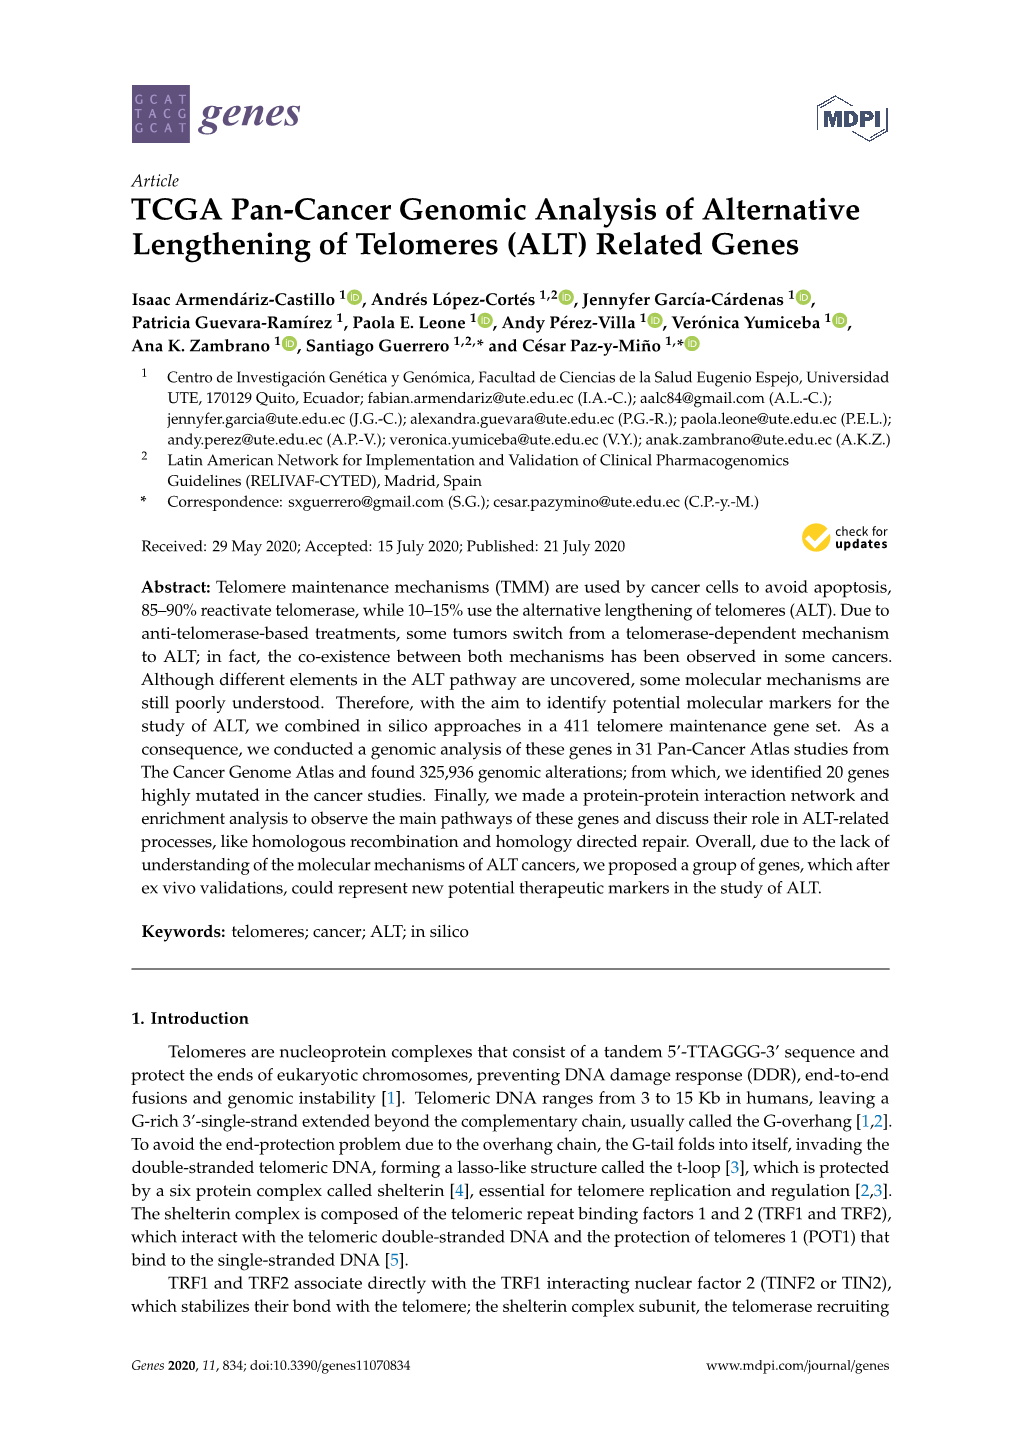 TCGA Pan-Cancer Genomic Analysis of Alternative Lengthening of Telomeres (ALT) Related Genes